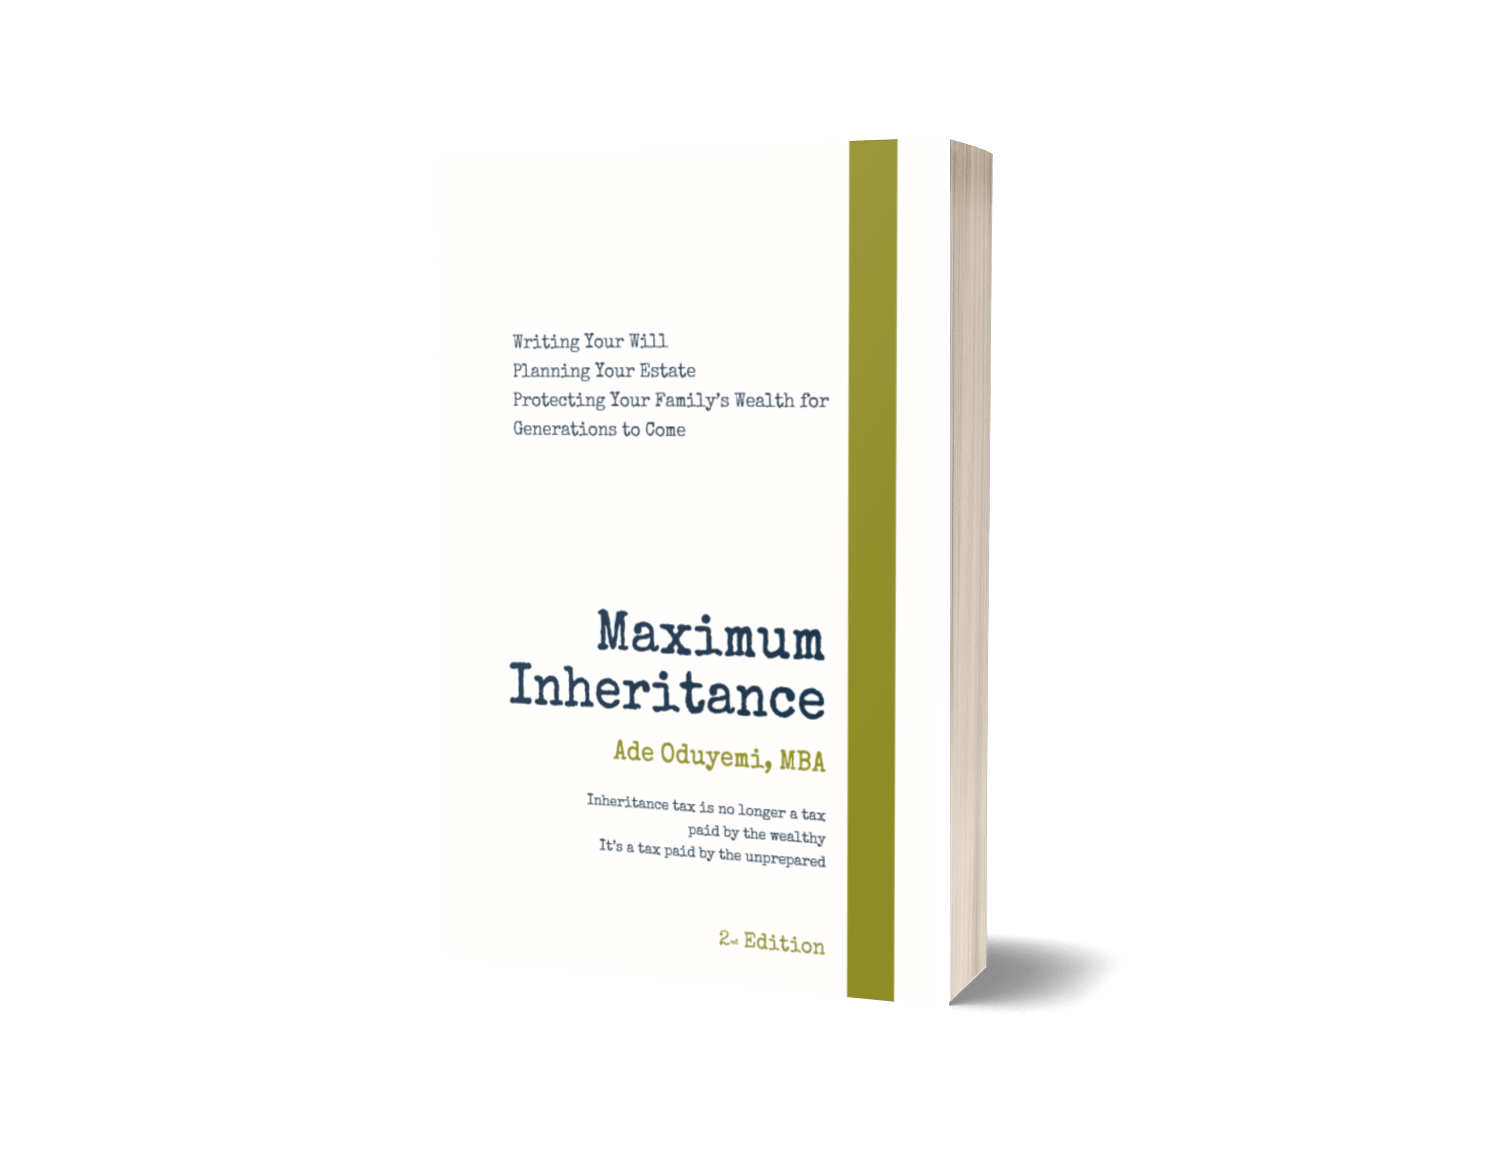 Maximum Inheritance - Inheritance Tax and Estate Planning Book